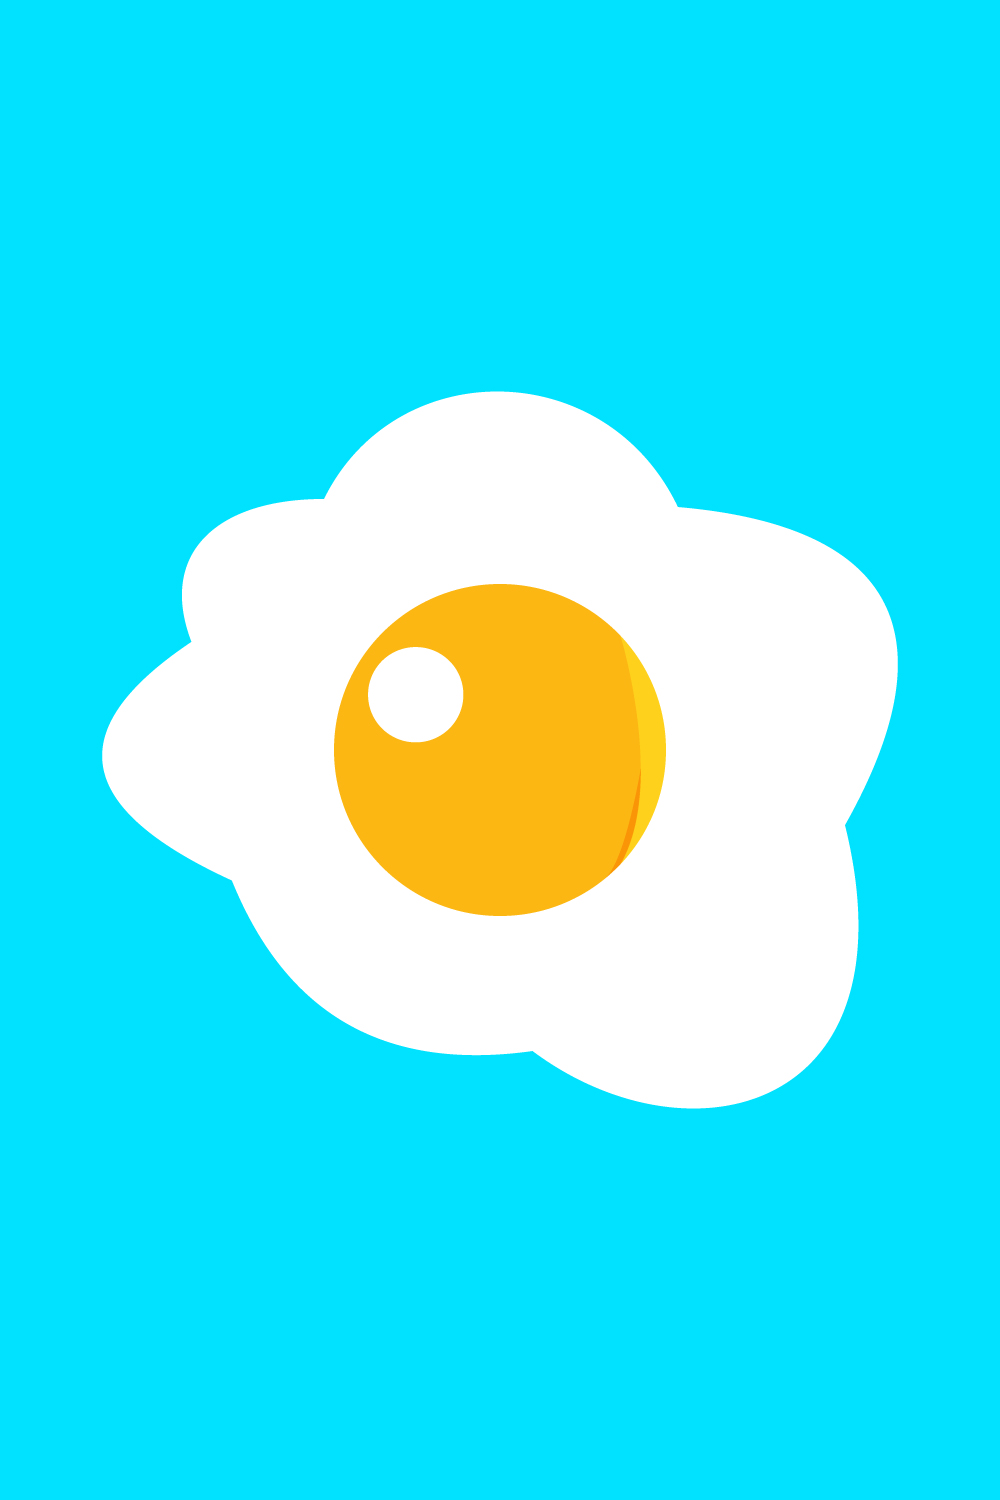 Creative Gradient Fresh Egg Logo design, Vector design concept pinterest preview image.